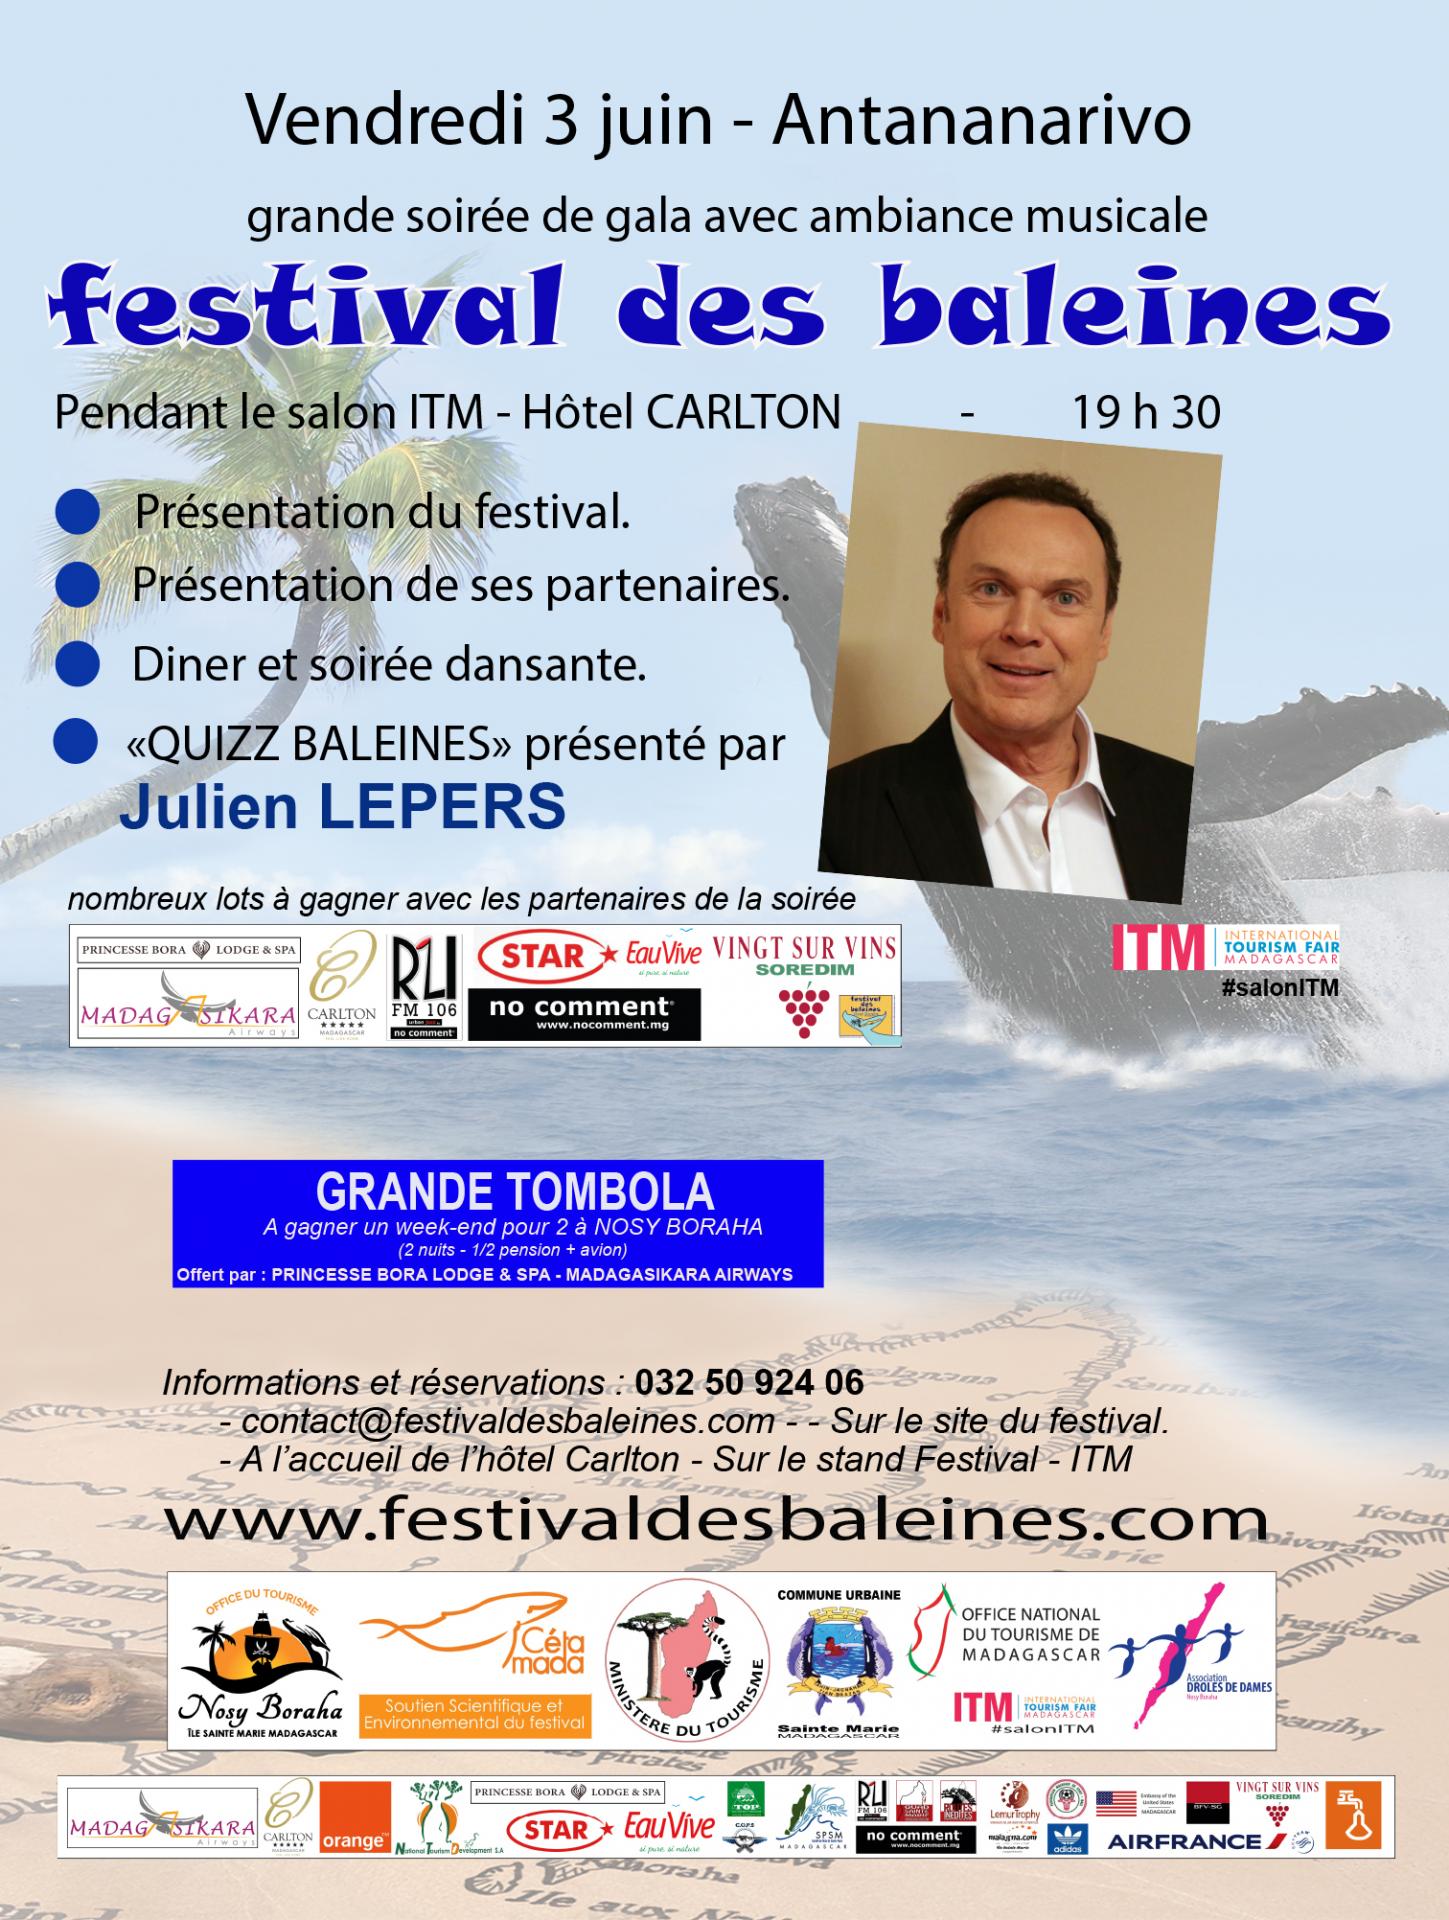 Soiree gala festival des baleines 2016